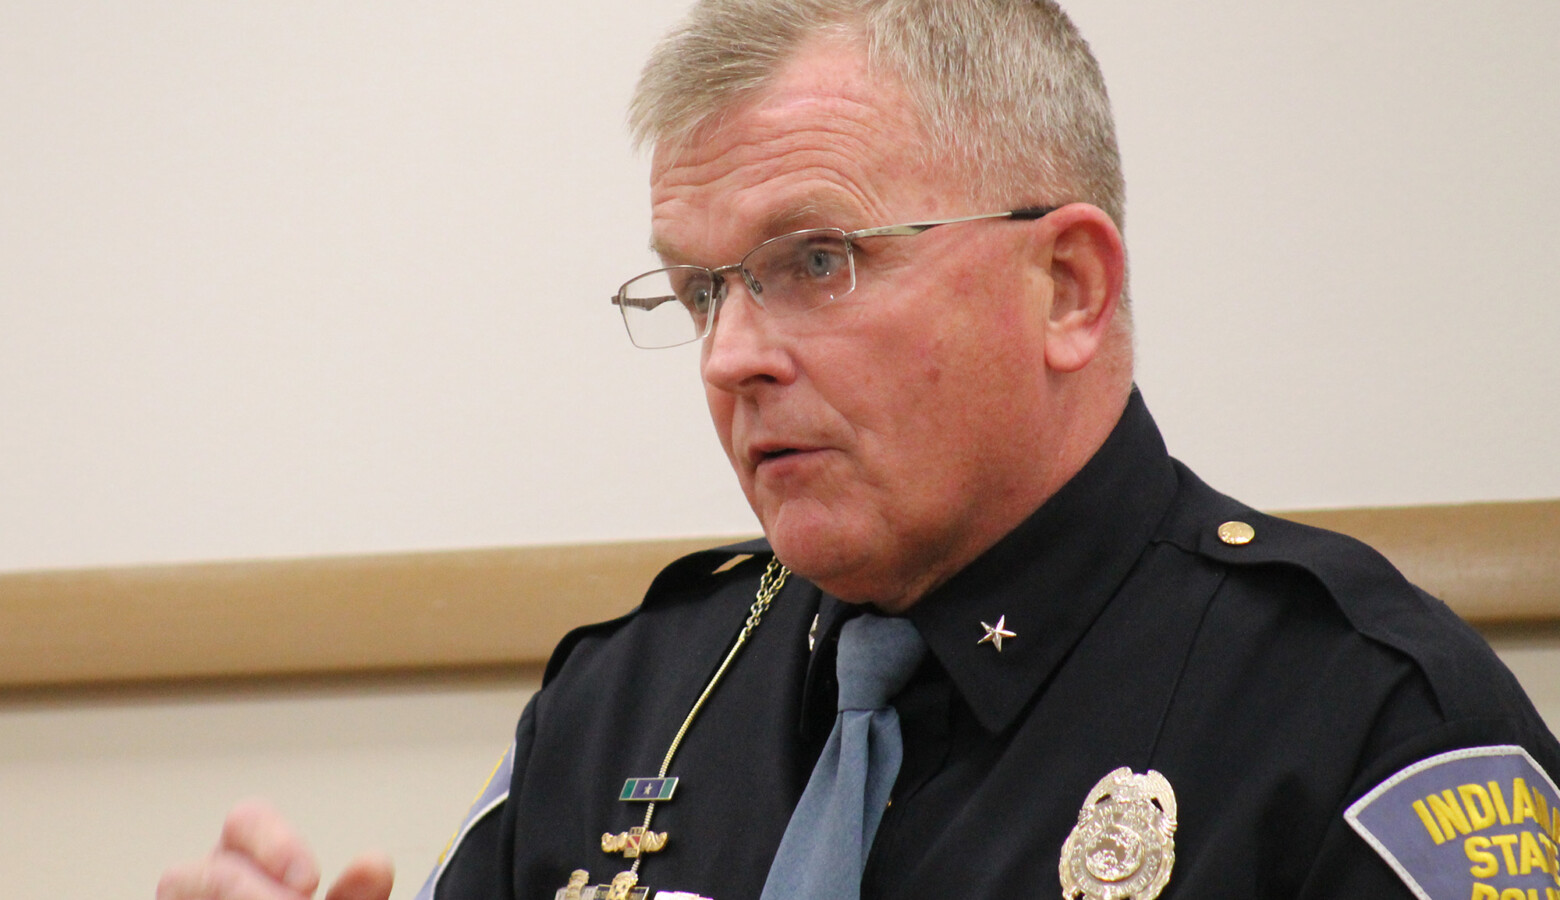 Indiana State Police Superintendent Doug Carter said eliminating handgun licenses could have "devastating consequences." (Lauren Chapman/IPB News)